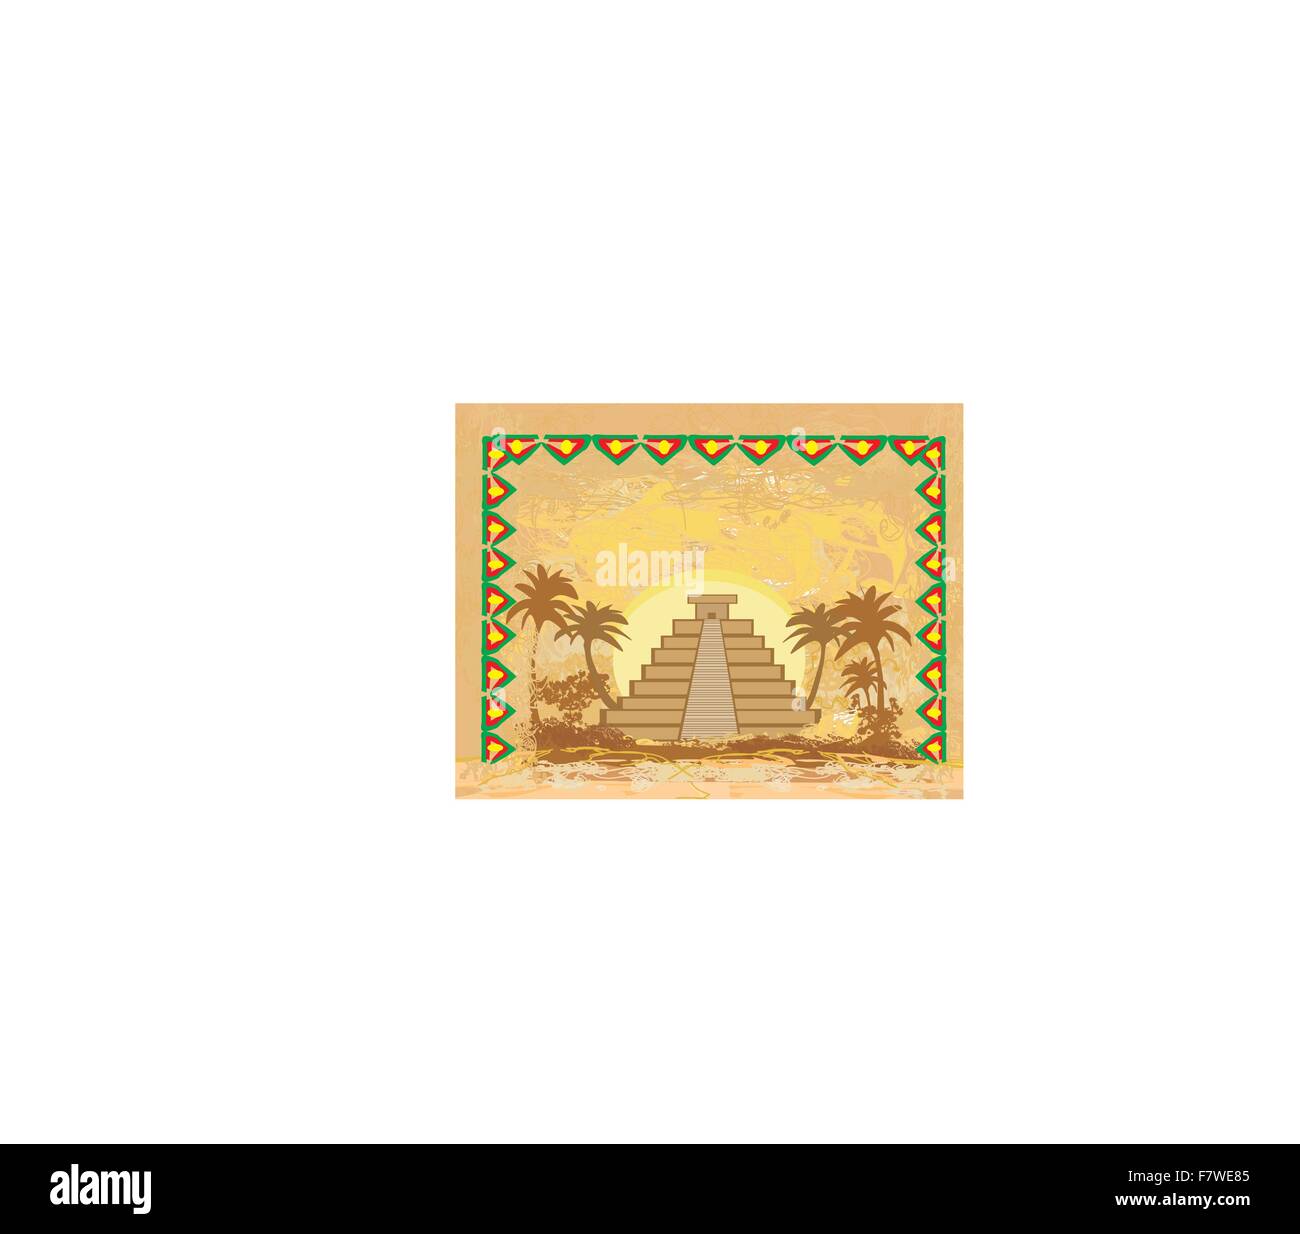 Pyramide Maya, Tulum, Mexique - grunge abstract background Illustration de Vecteur